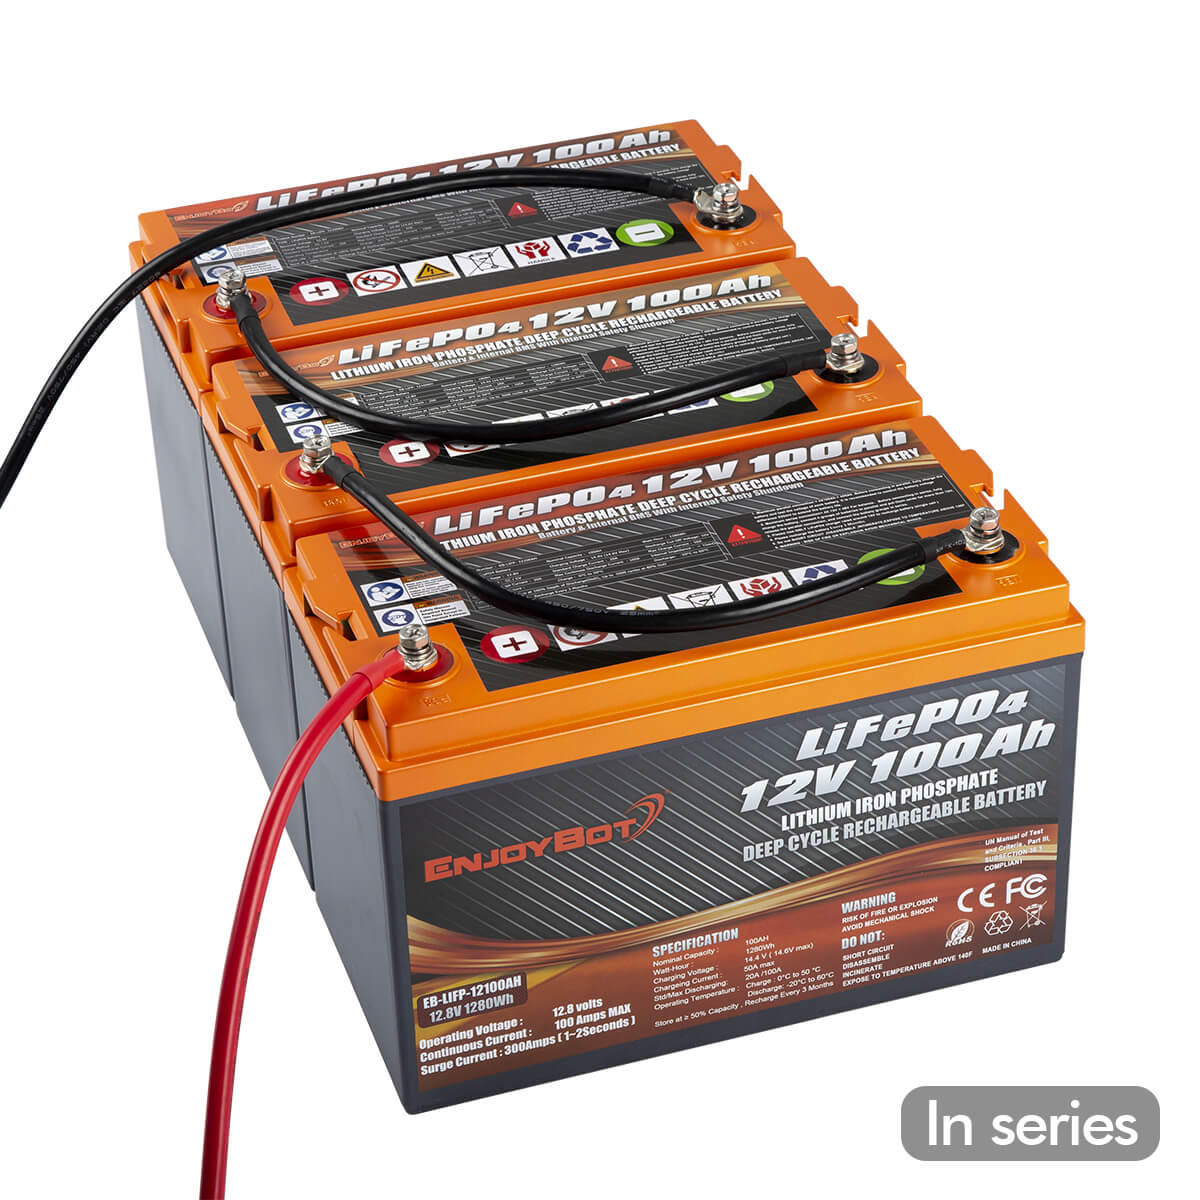 Enjoybot LiFePO4 Golf Cart Battery 36v 100ah Lithium Battery 3840 Wh - –  Enjoybot Official Store